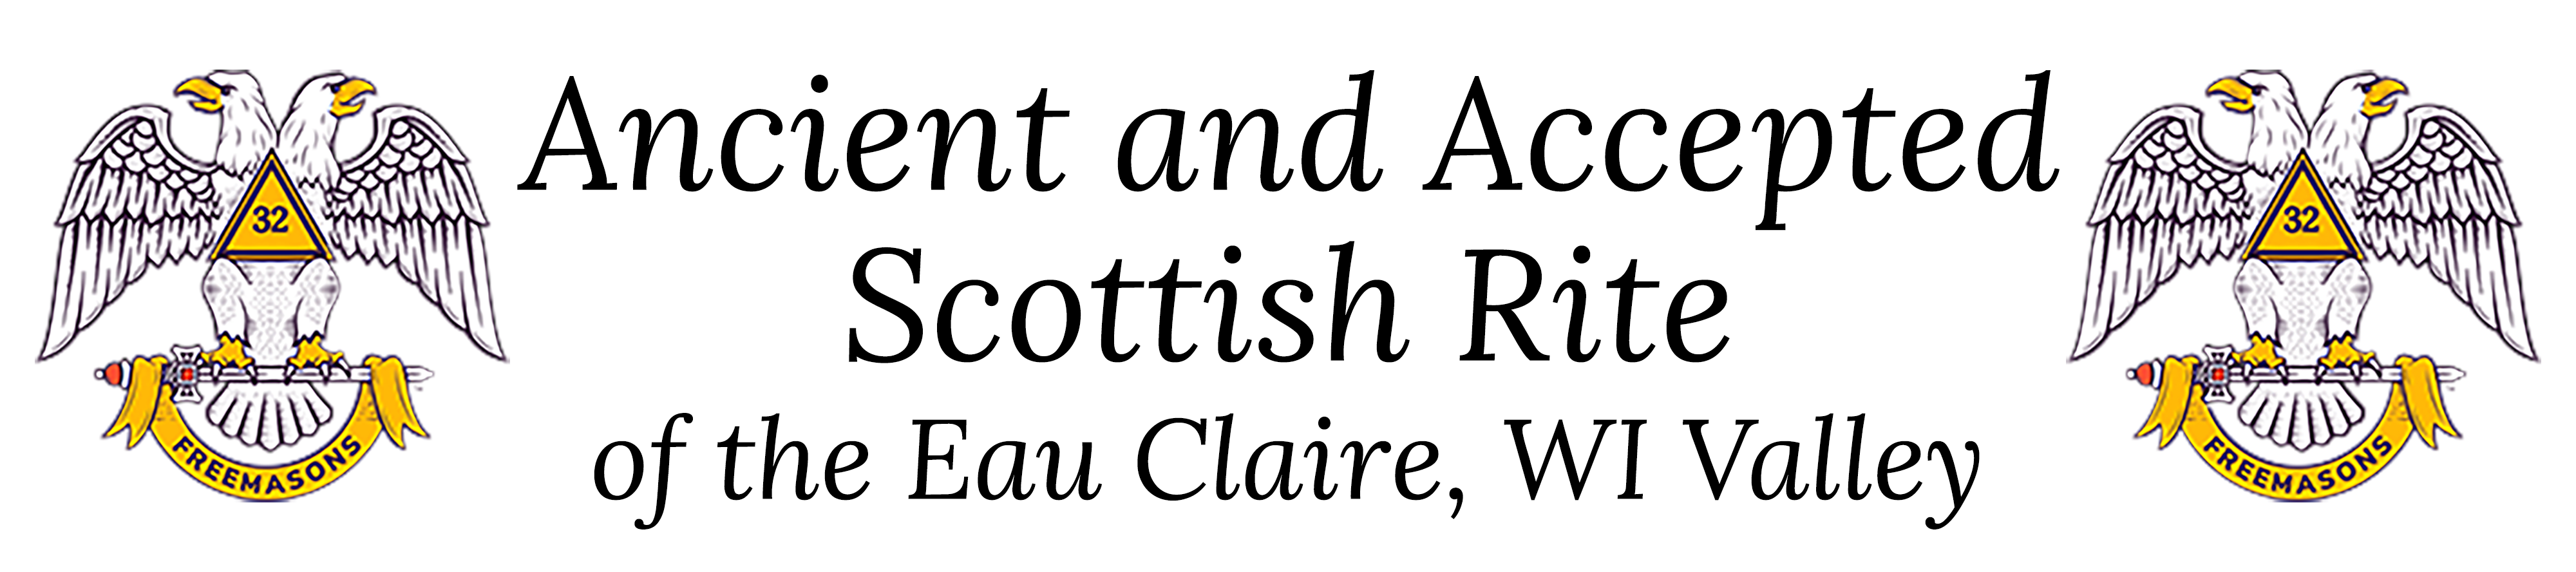 Scottish Rite Logo Header